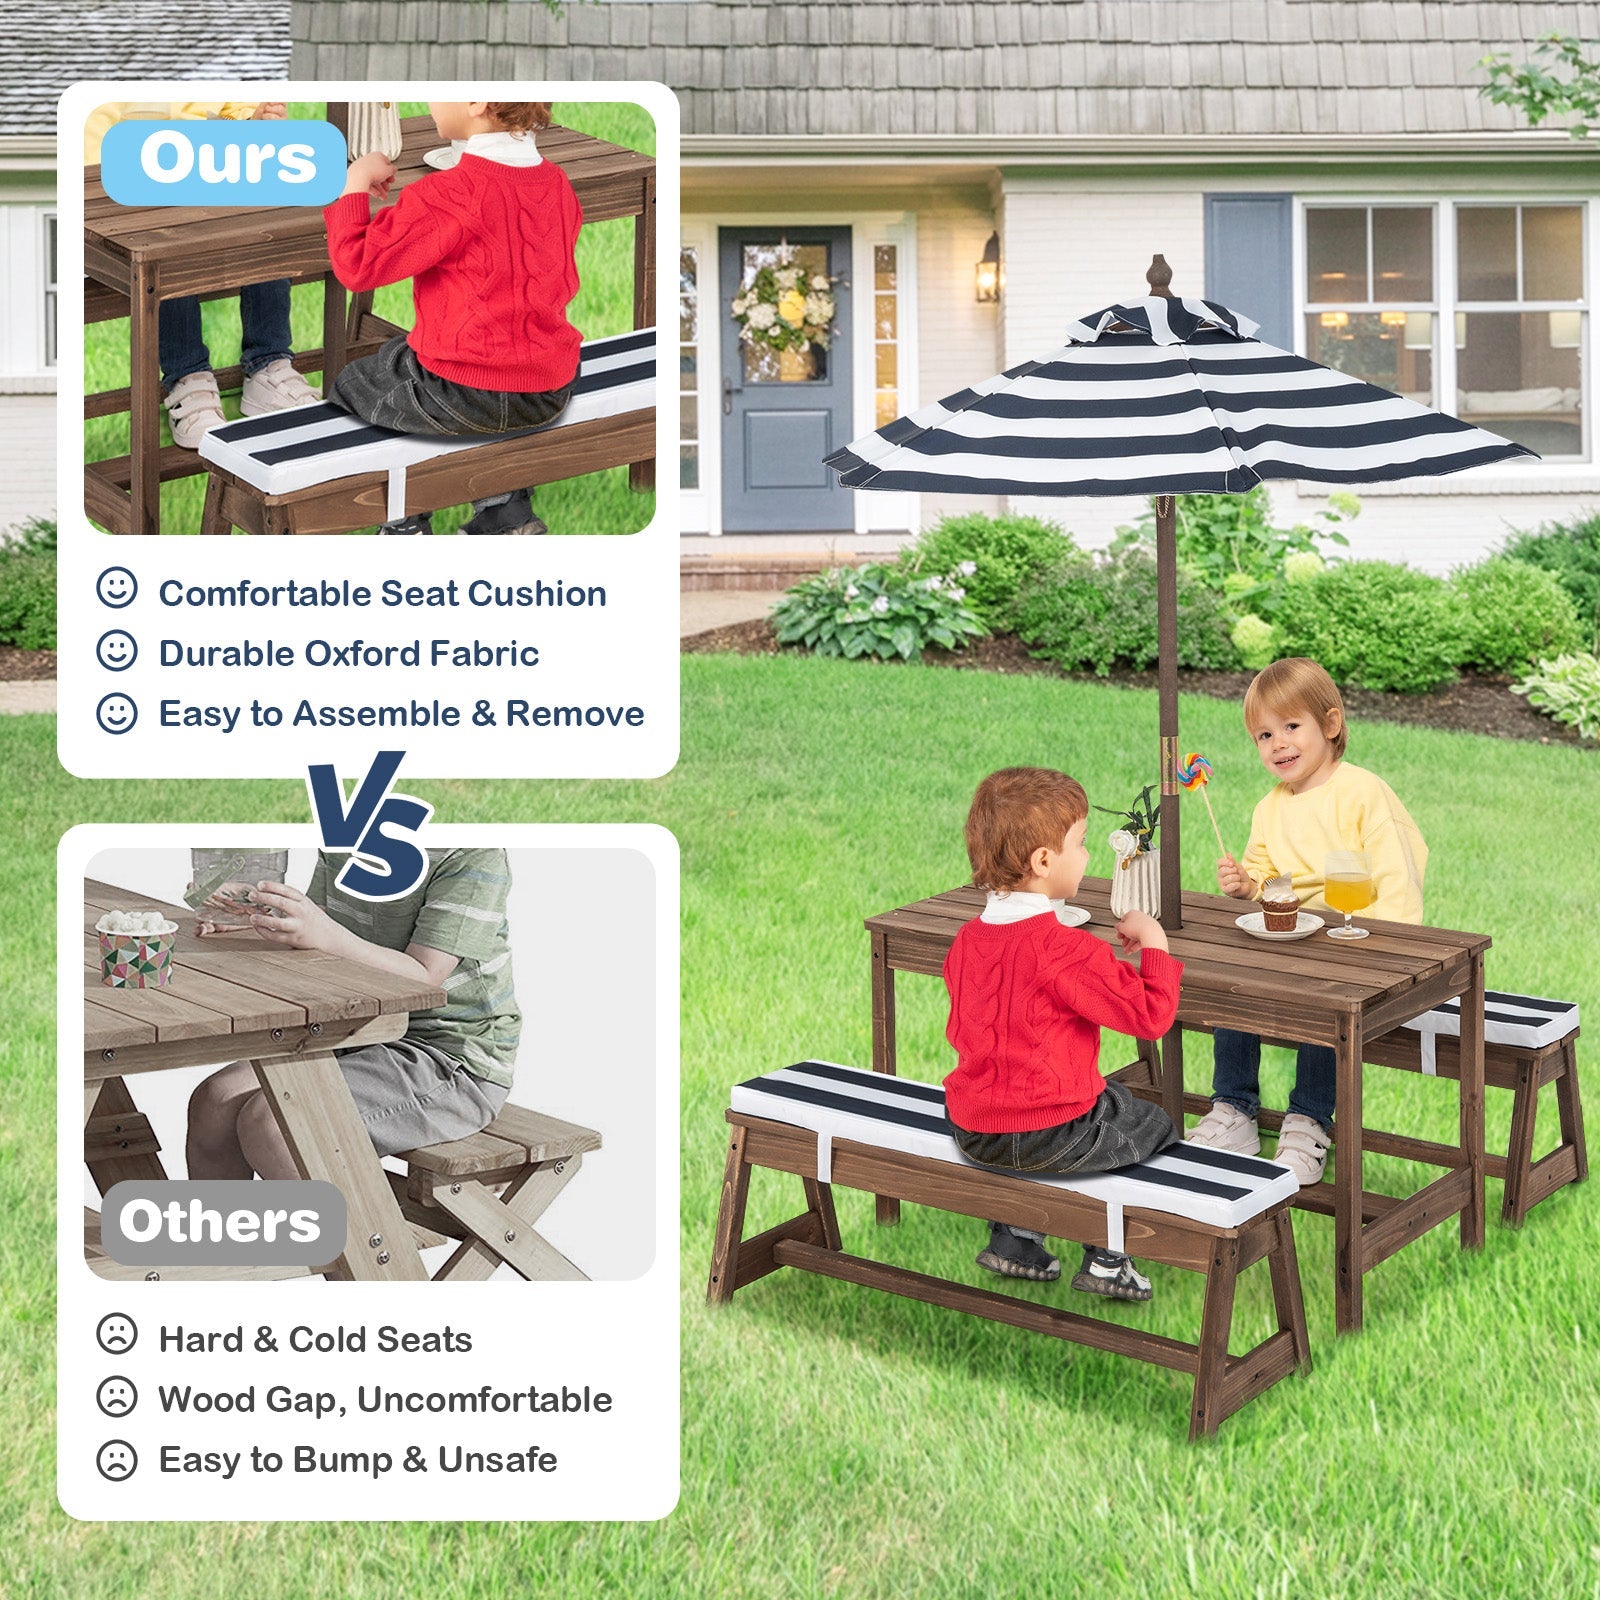 Children's Backyard Paradise: Table, Bench, Umbrella & Cushions - Outdoor Joy